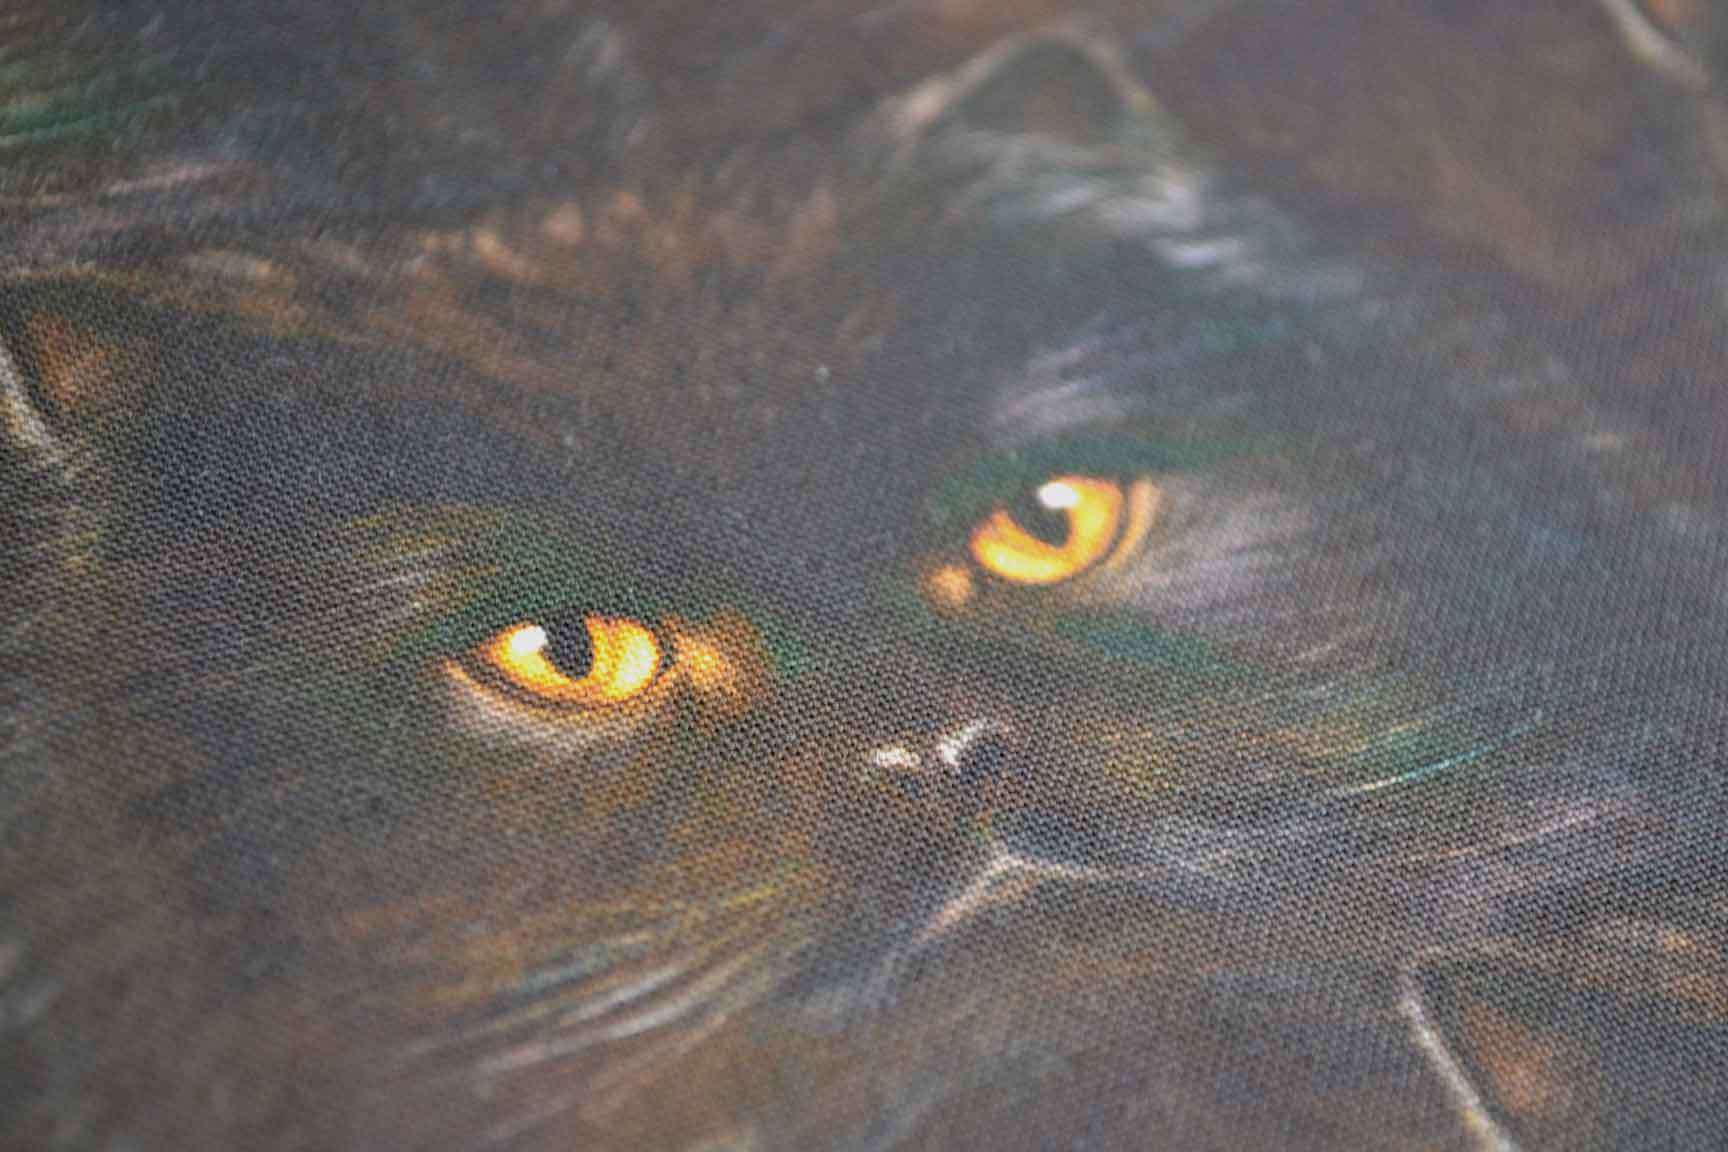 Cats Eyes Black, Robert Kaufman